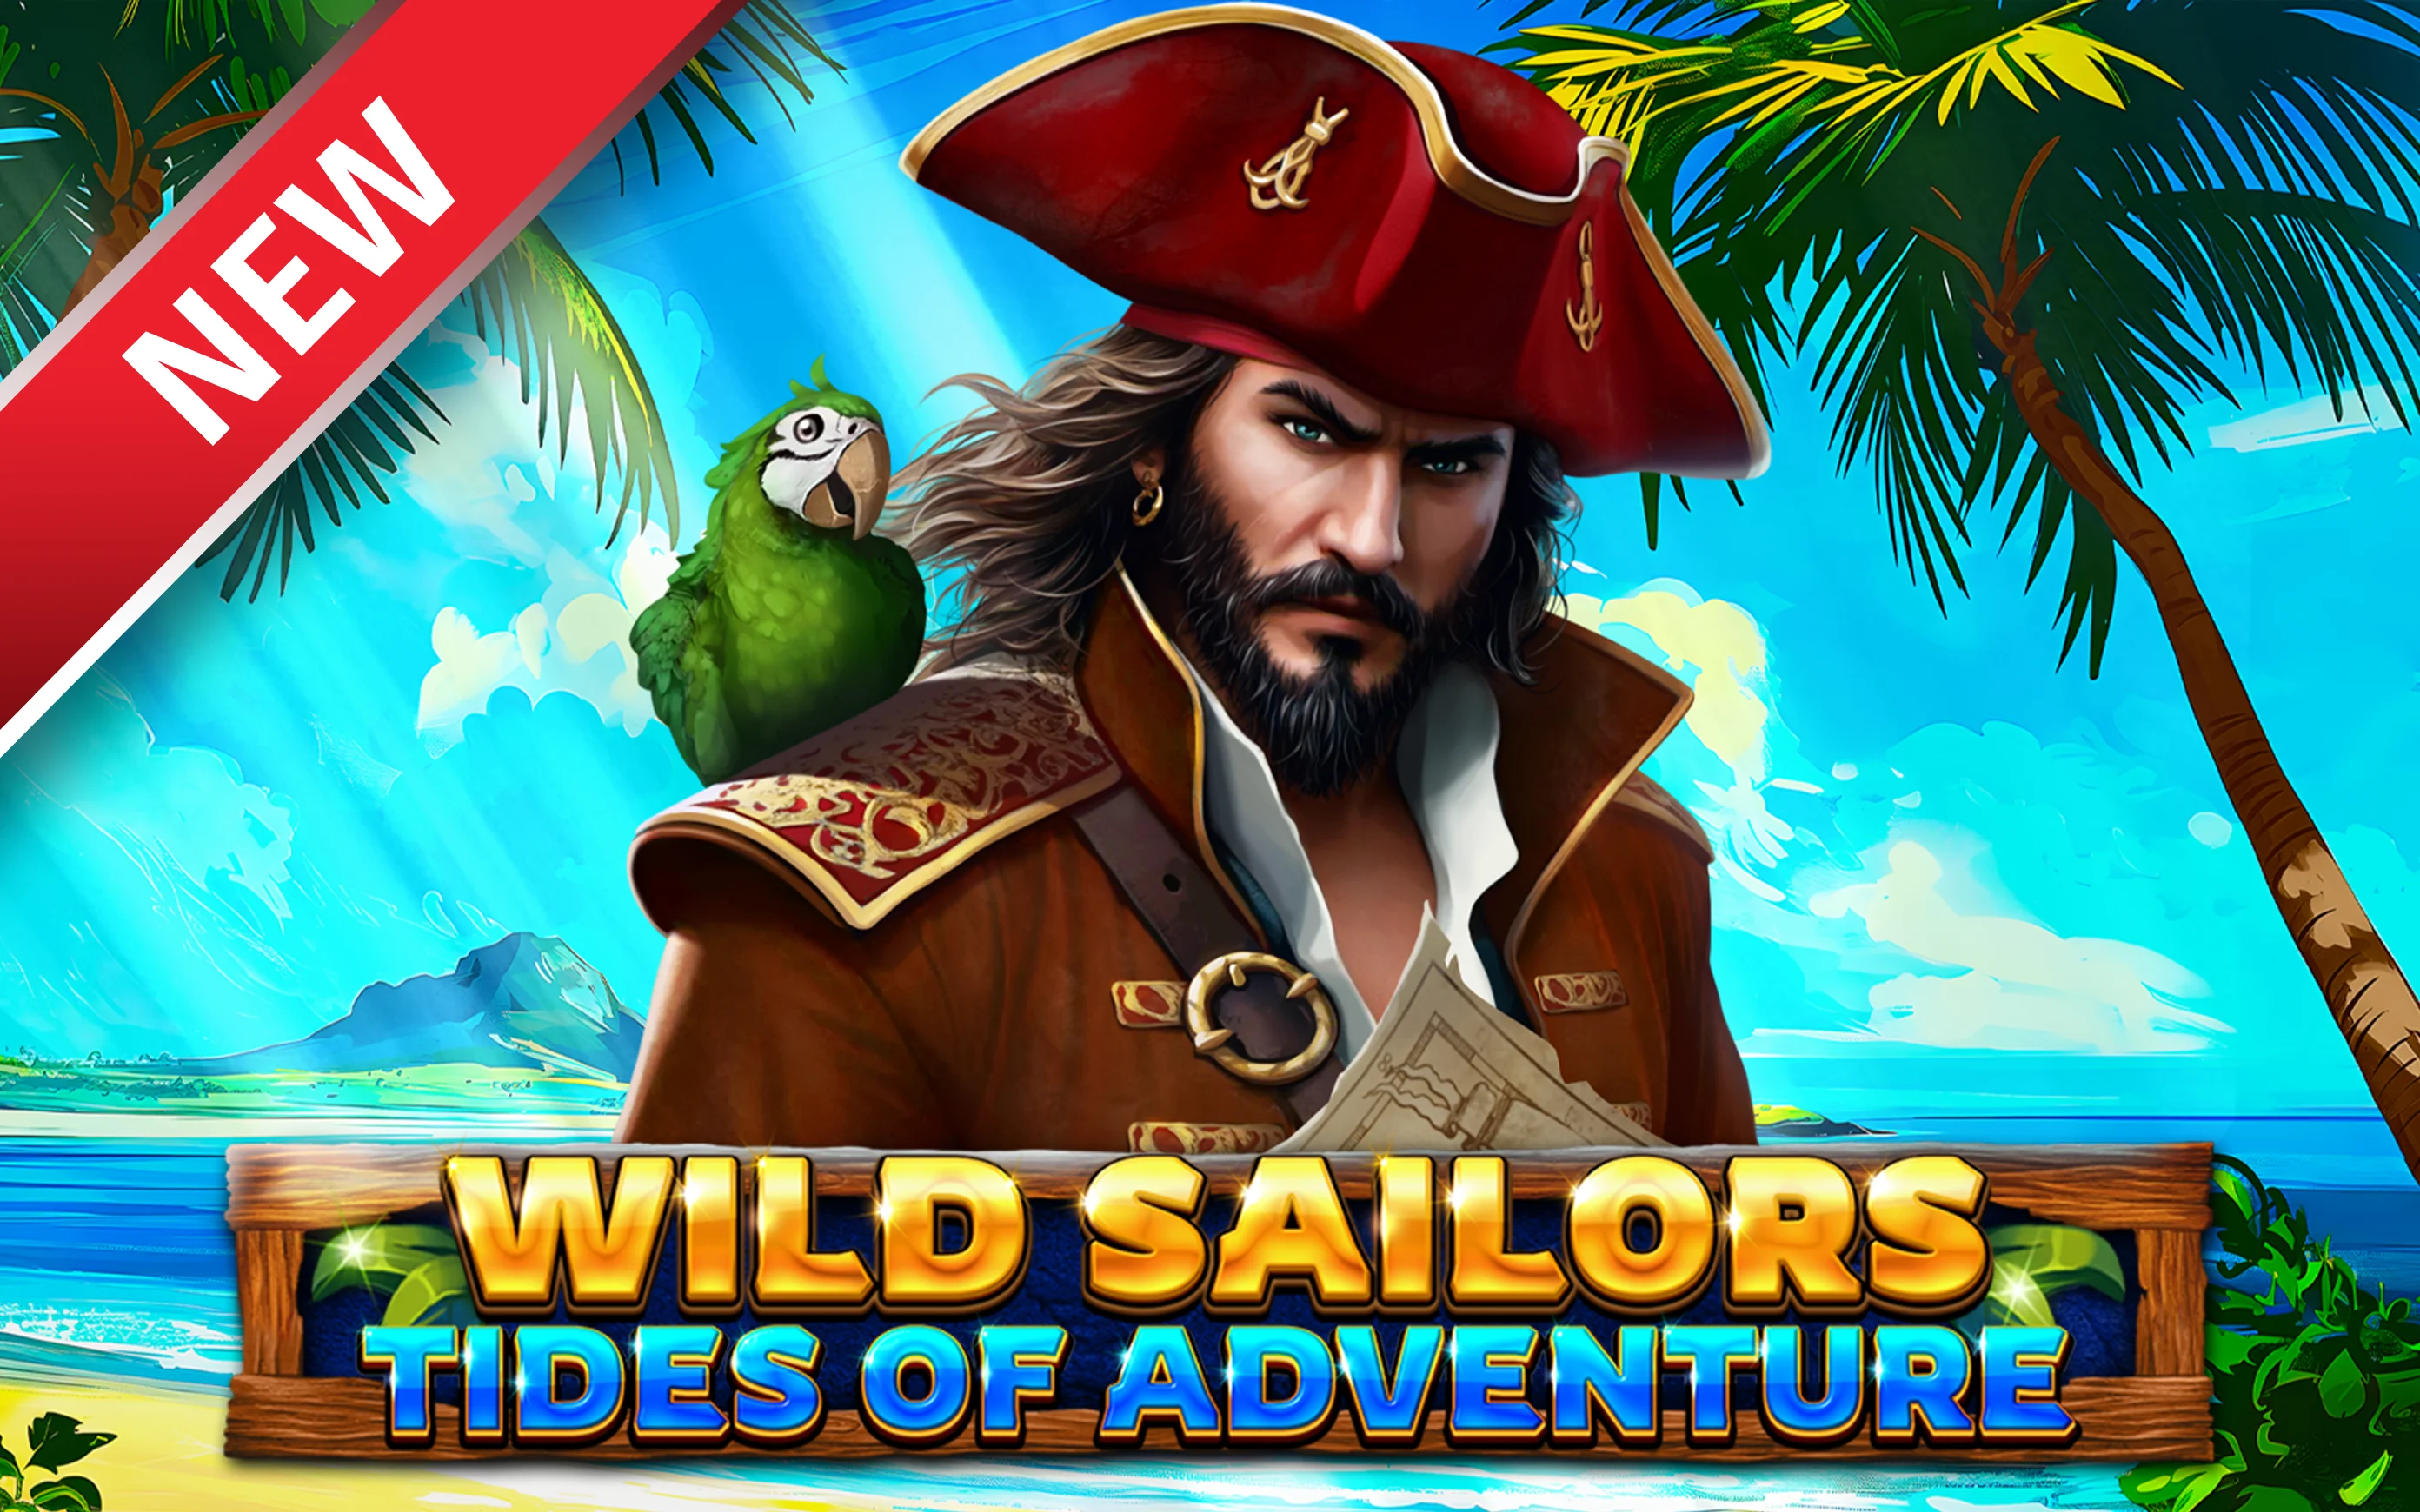 Juega a Wild Sailors – Tides of Adventure en el casino en línea de Starcasino.be